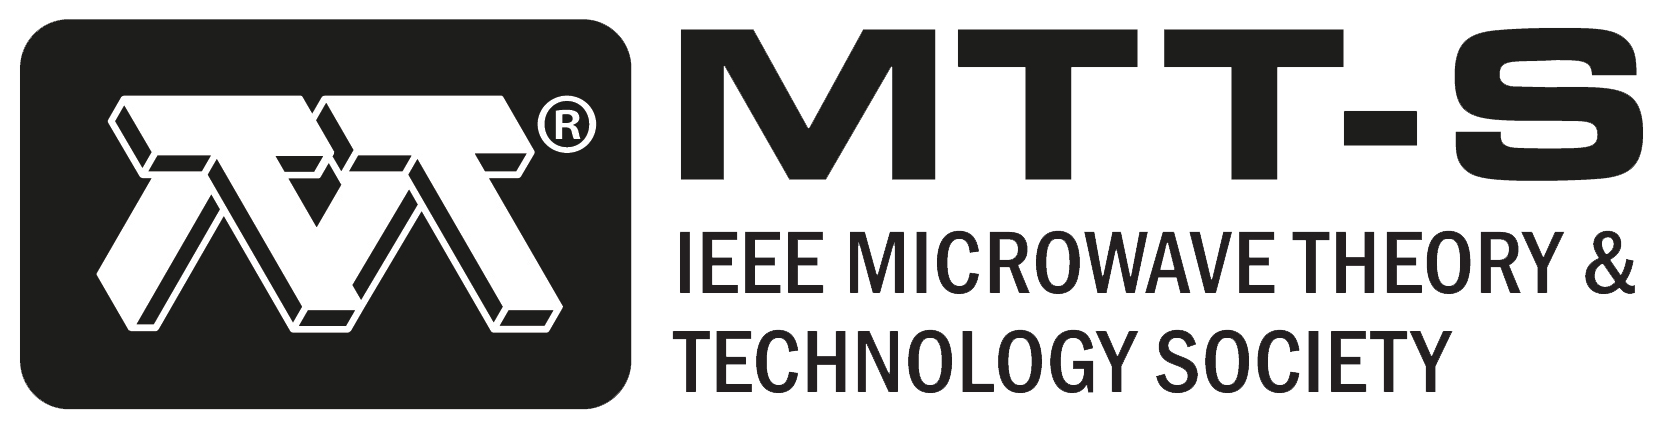 MTT-S logo